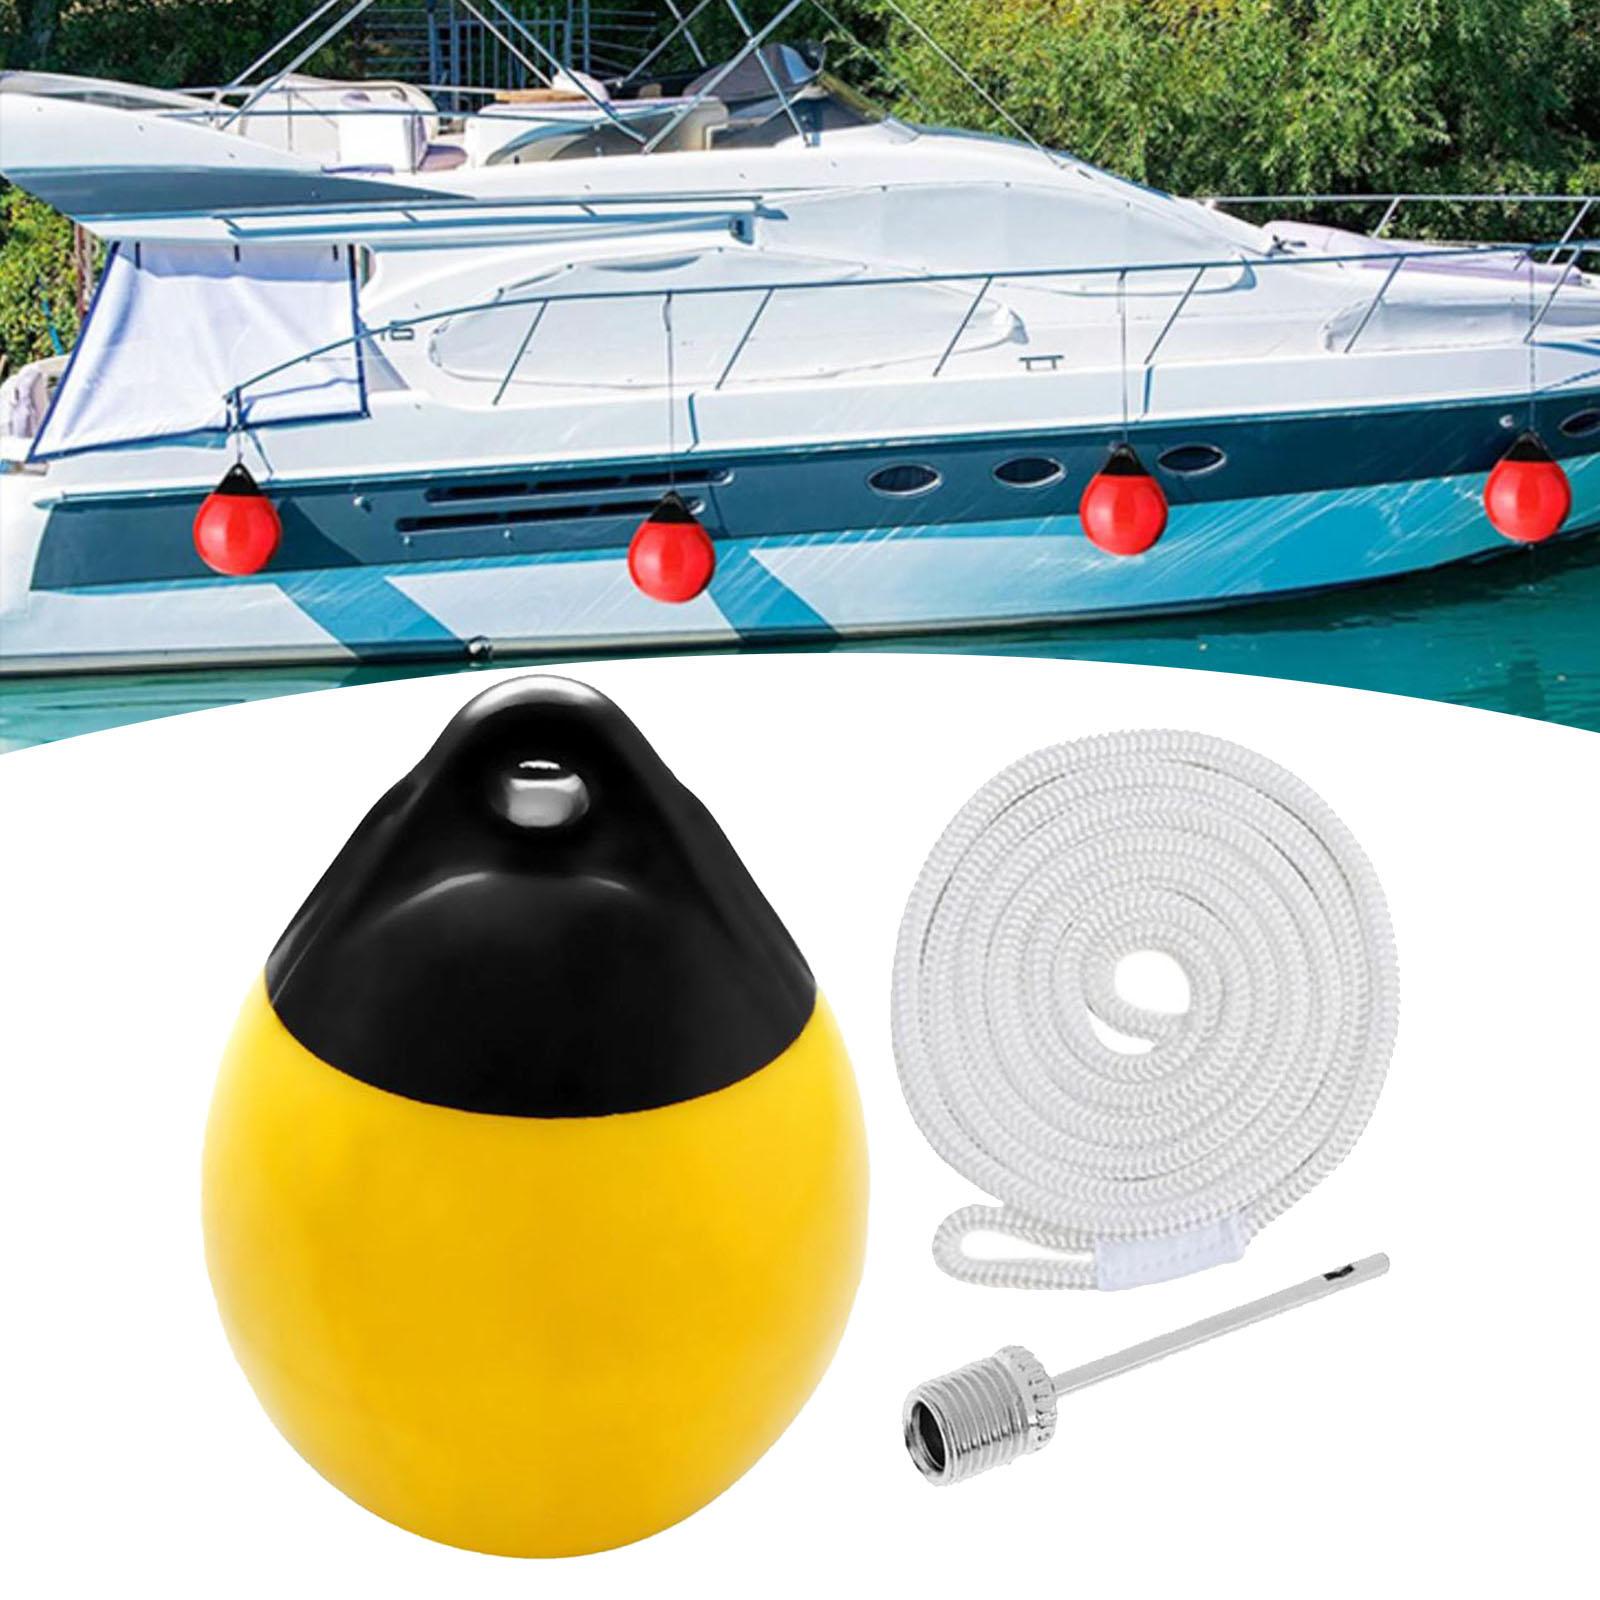 Boat Fender Ball Dock Edge Docking Anchor Buoy for Yacht Sailboats Row Boats Yellow White Rope